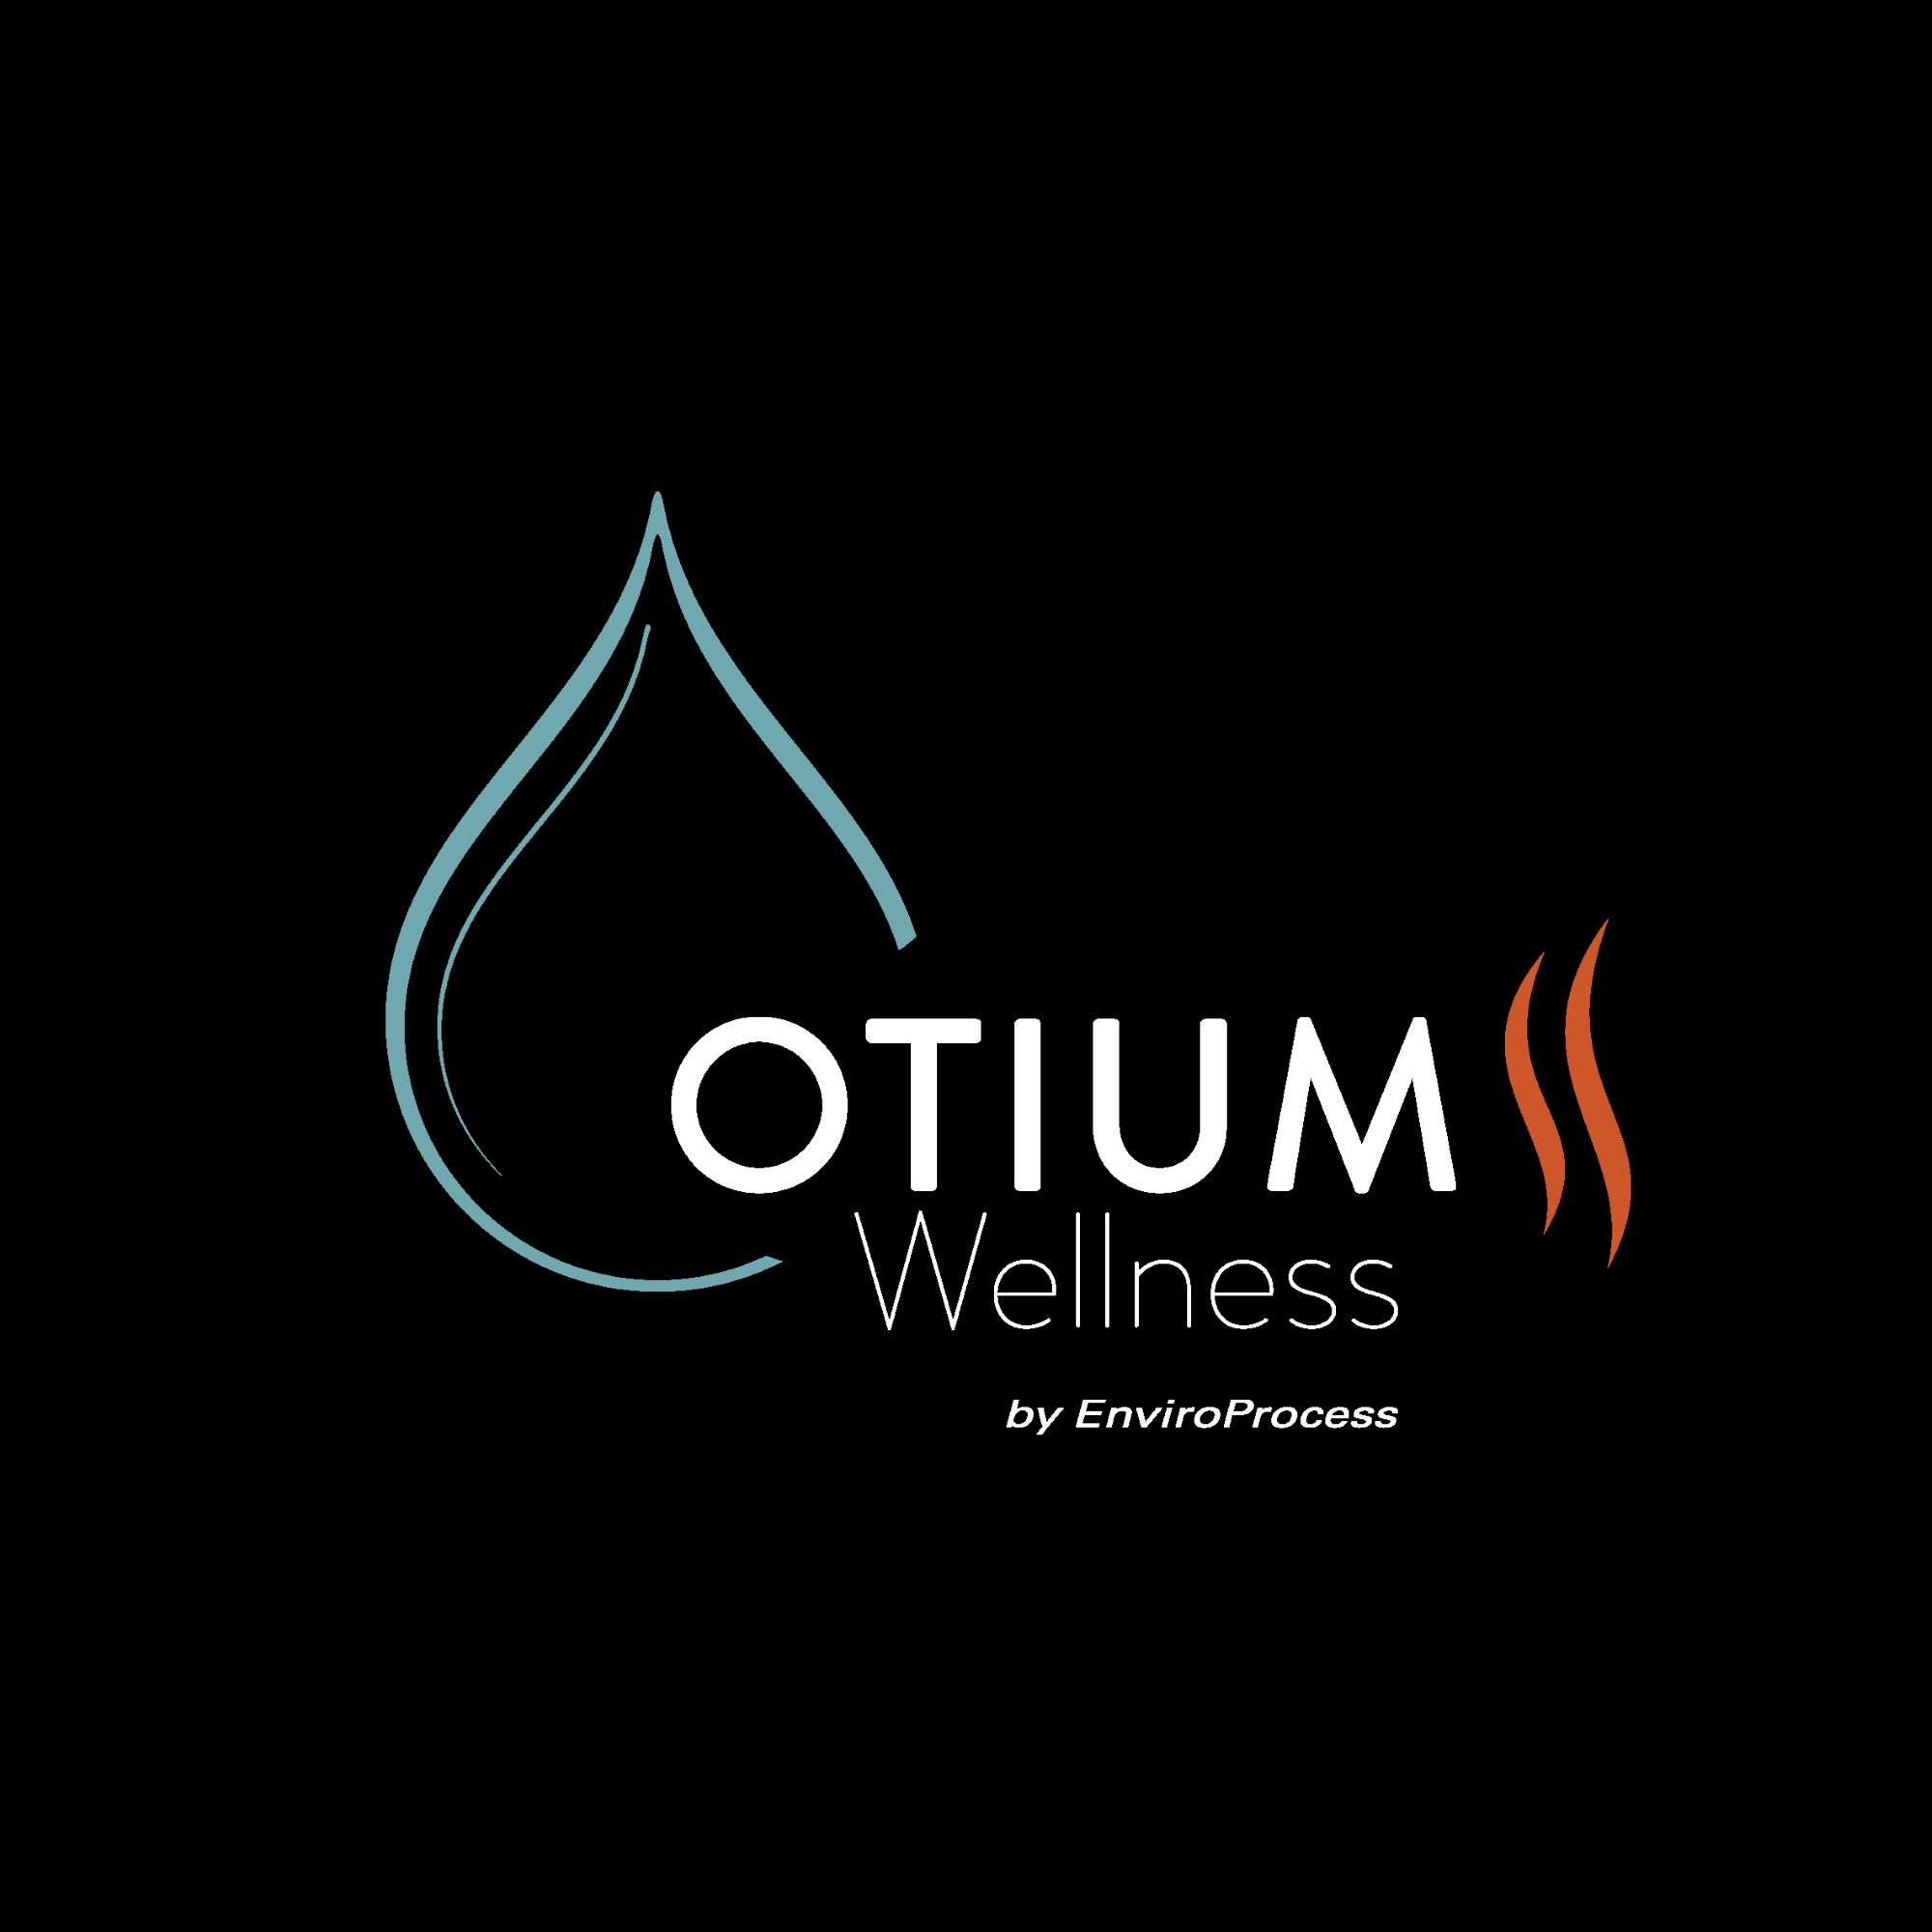 OTIUM Wellness by EnviroProcess